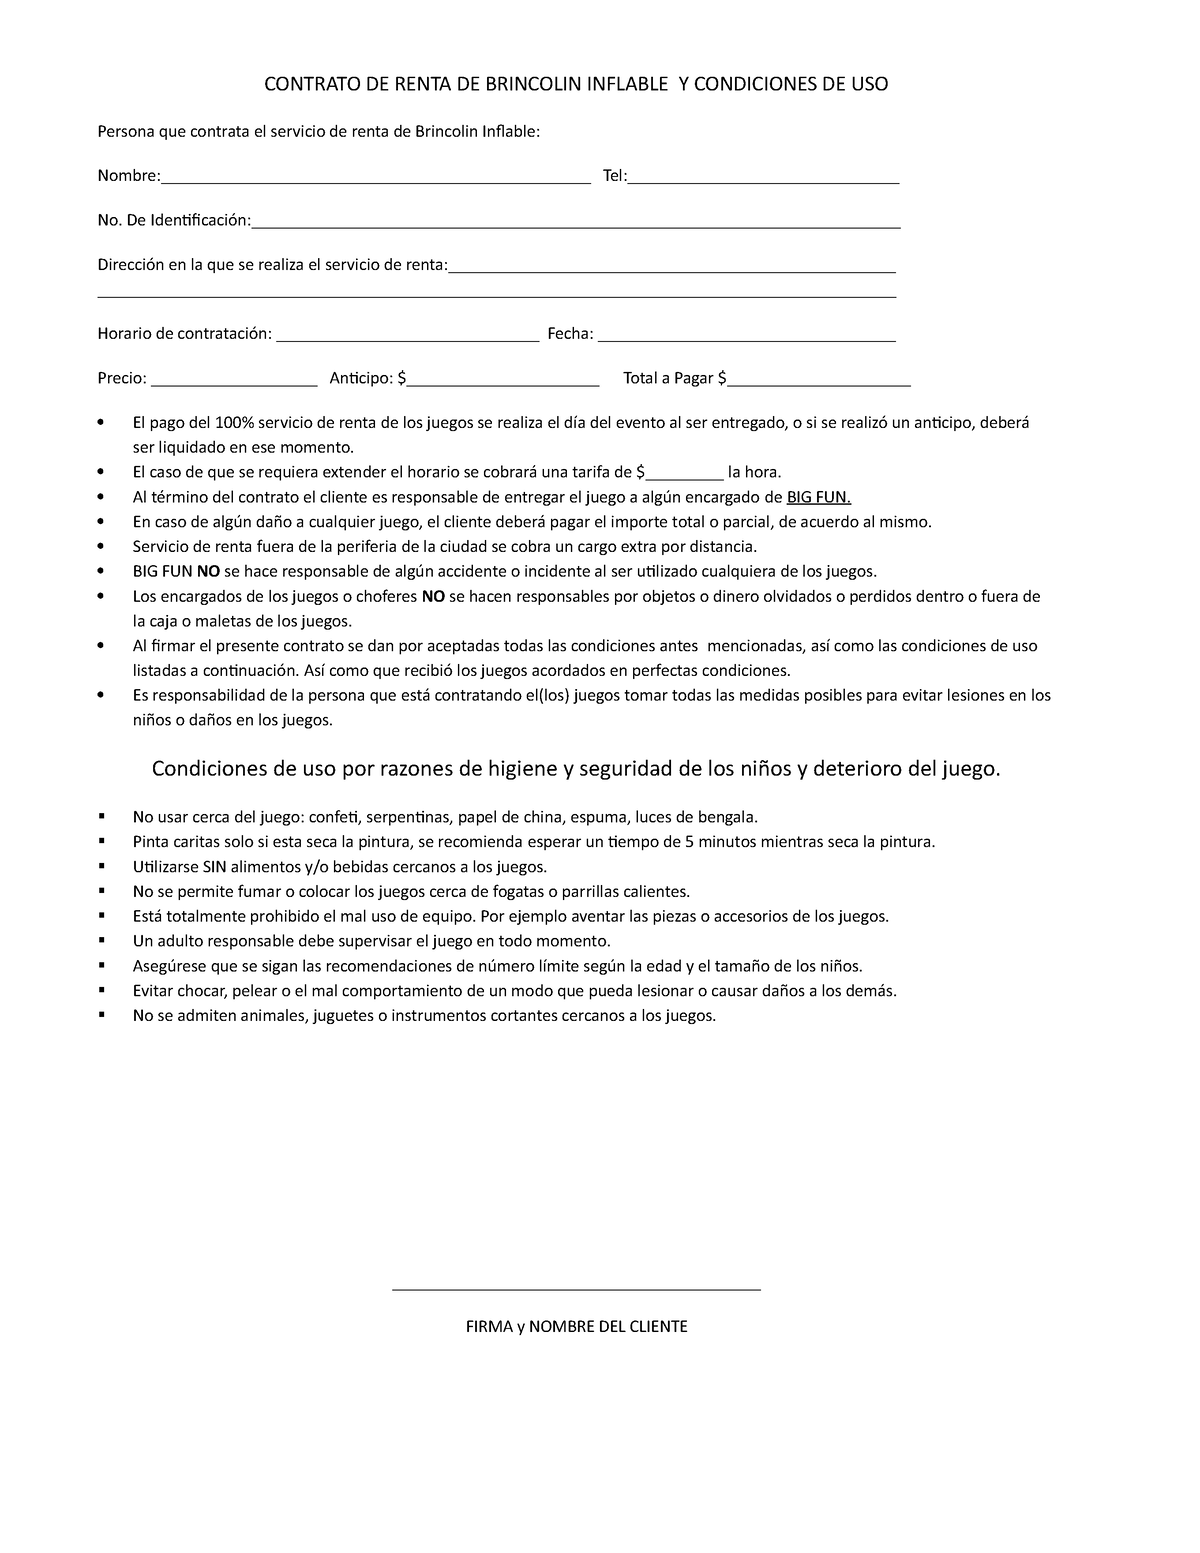 Contrato Para Renta De Brincolin Inflable Contrato De Renta De Brincolin Inflable Y 0599